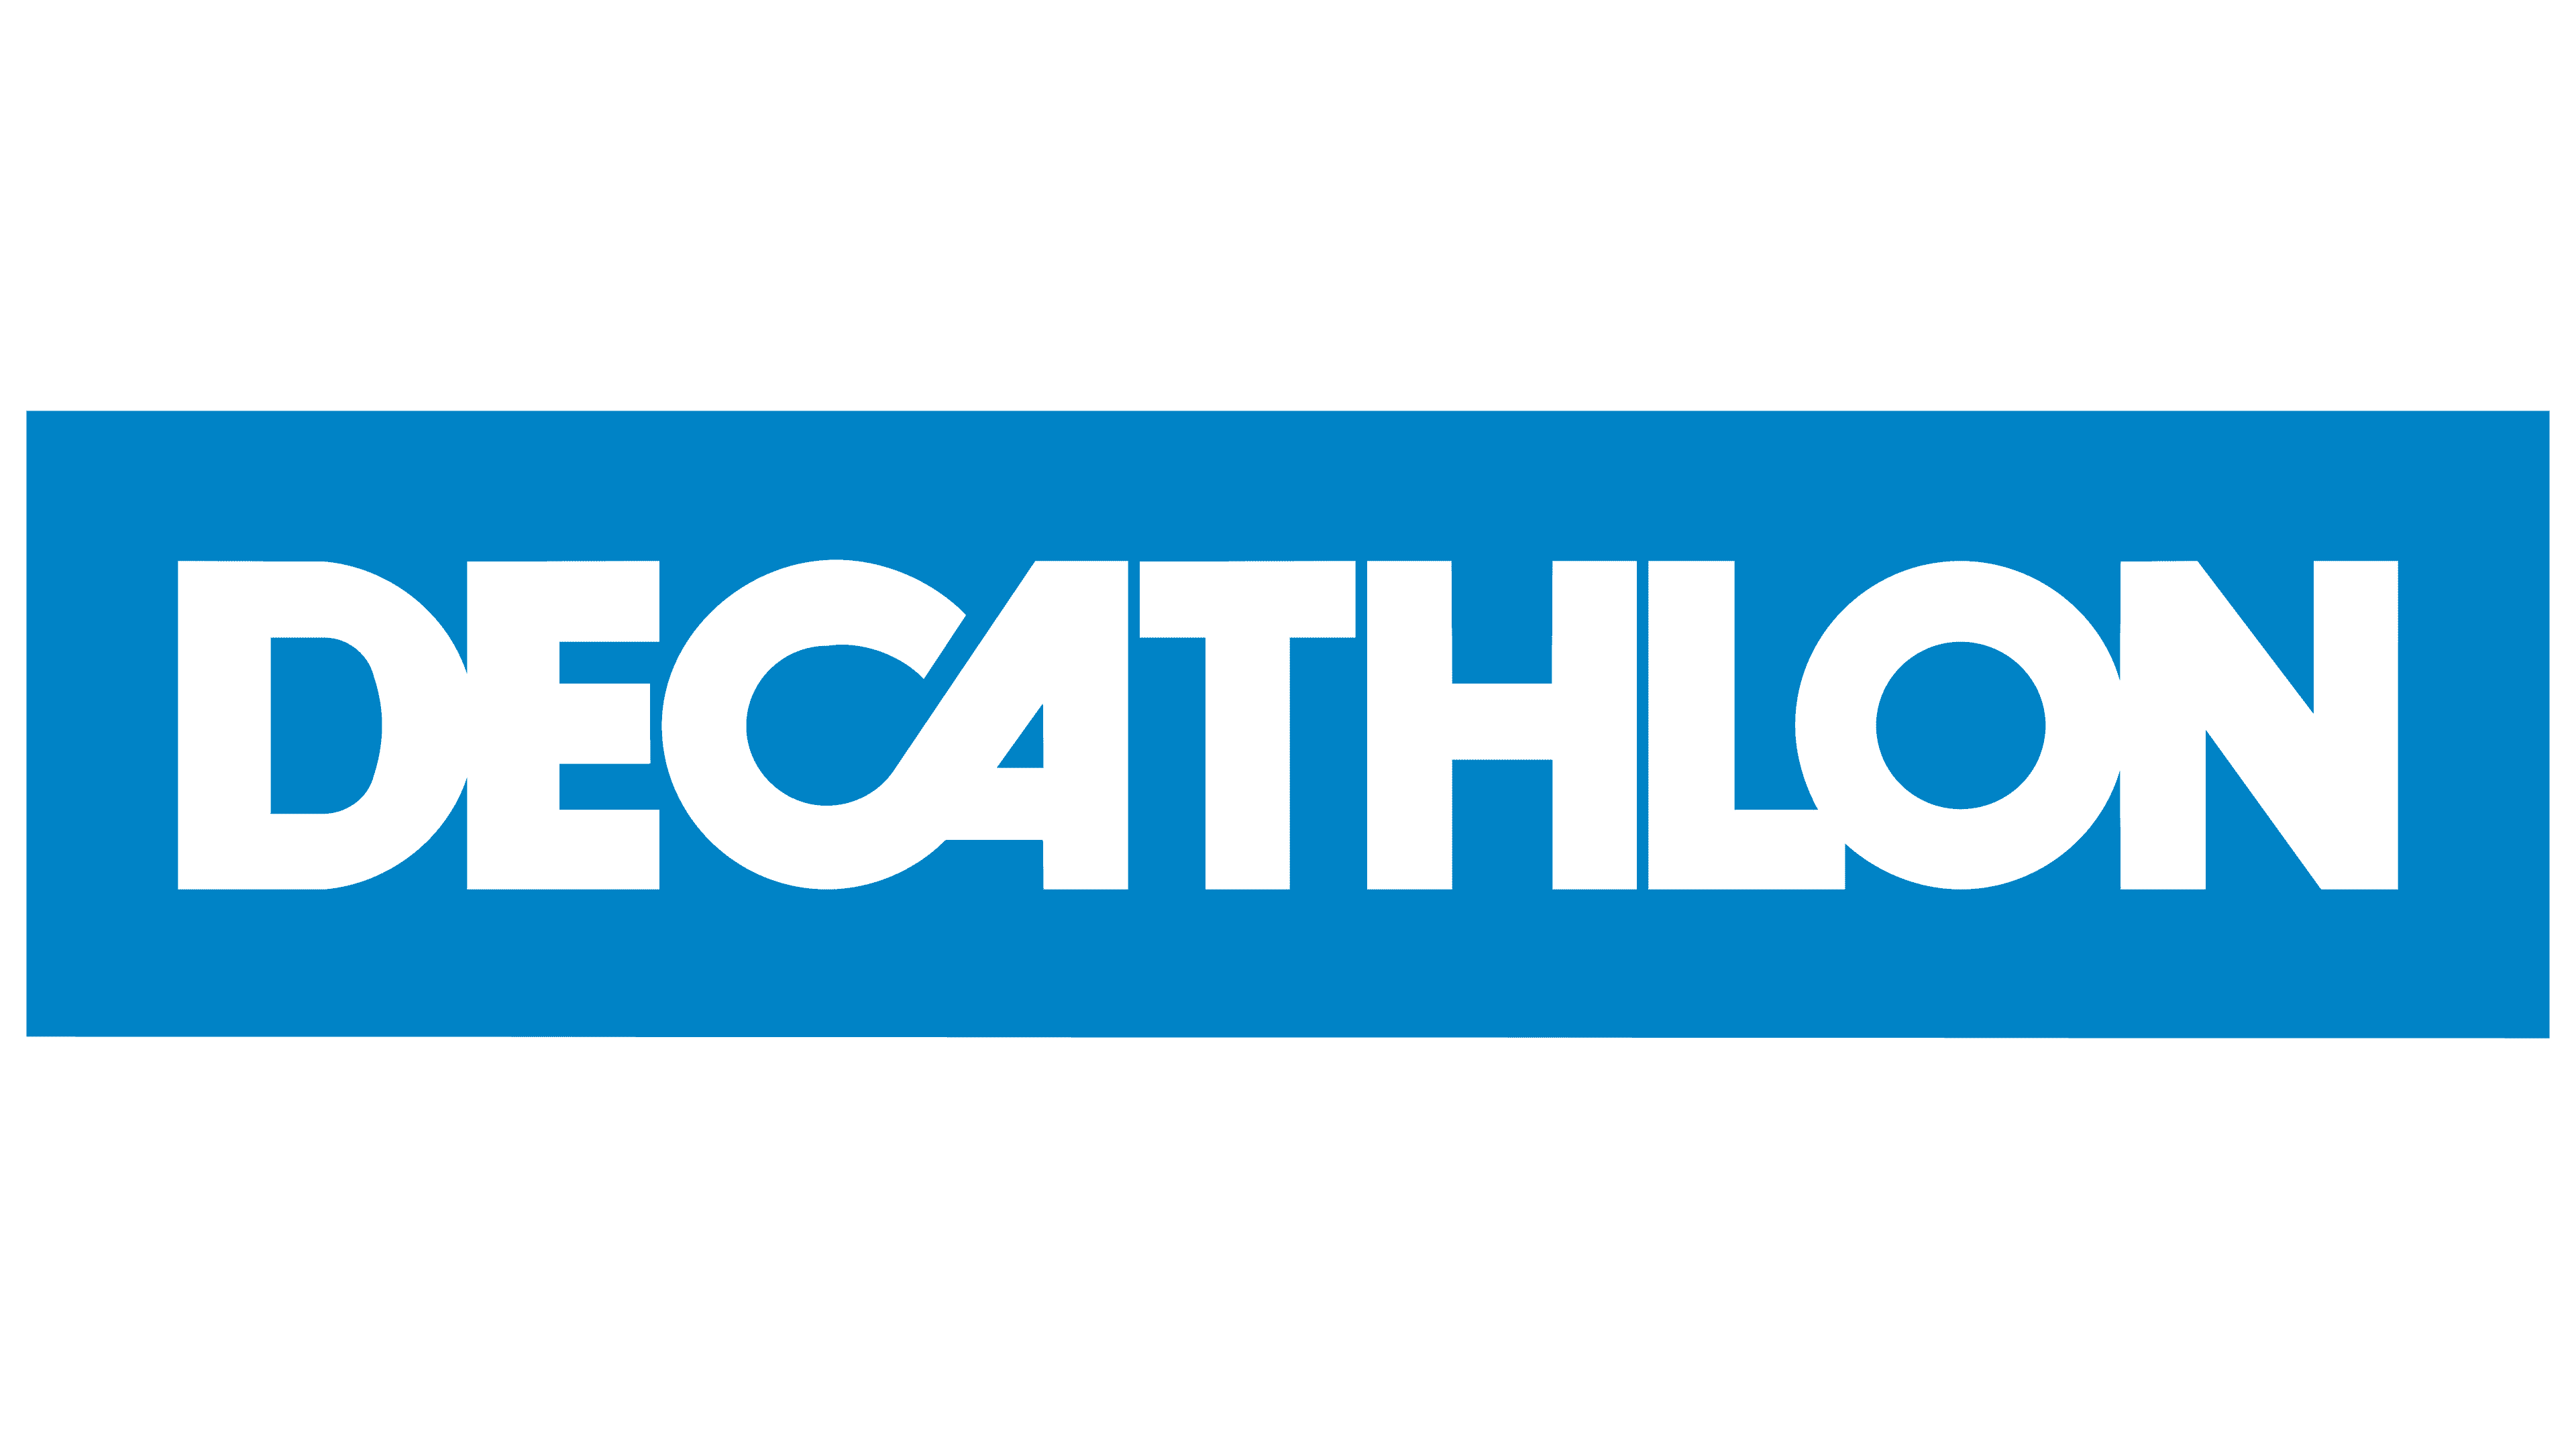 logo-Decathlon